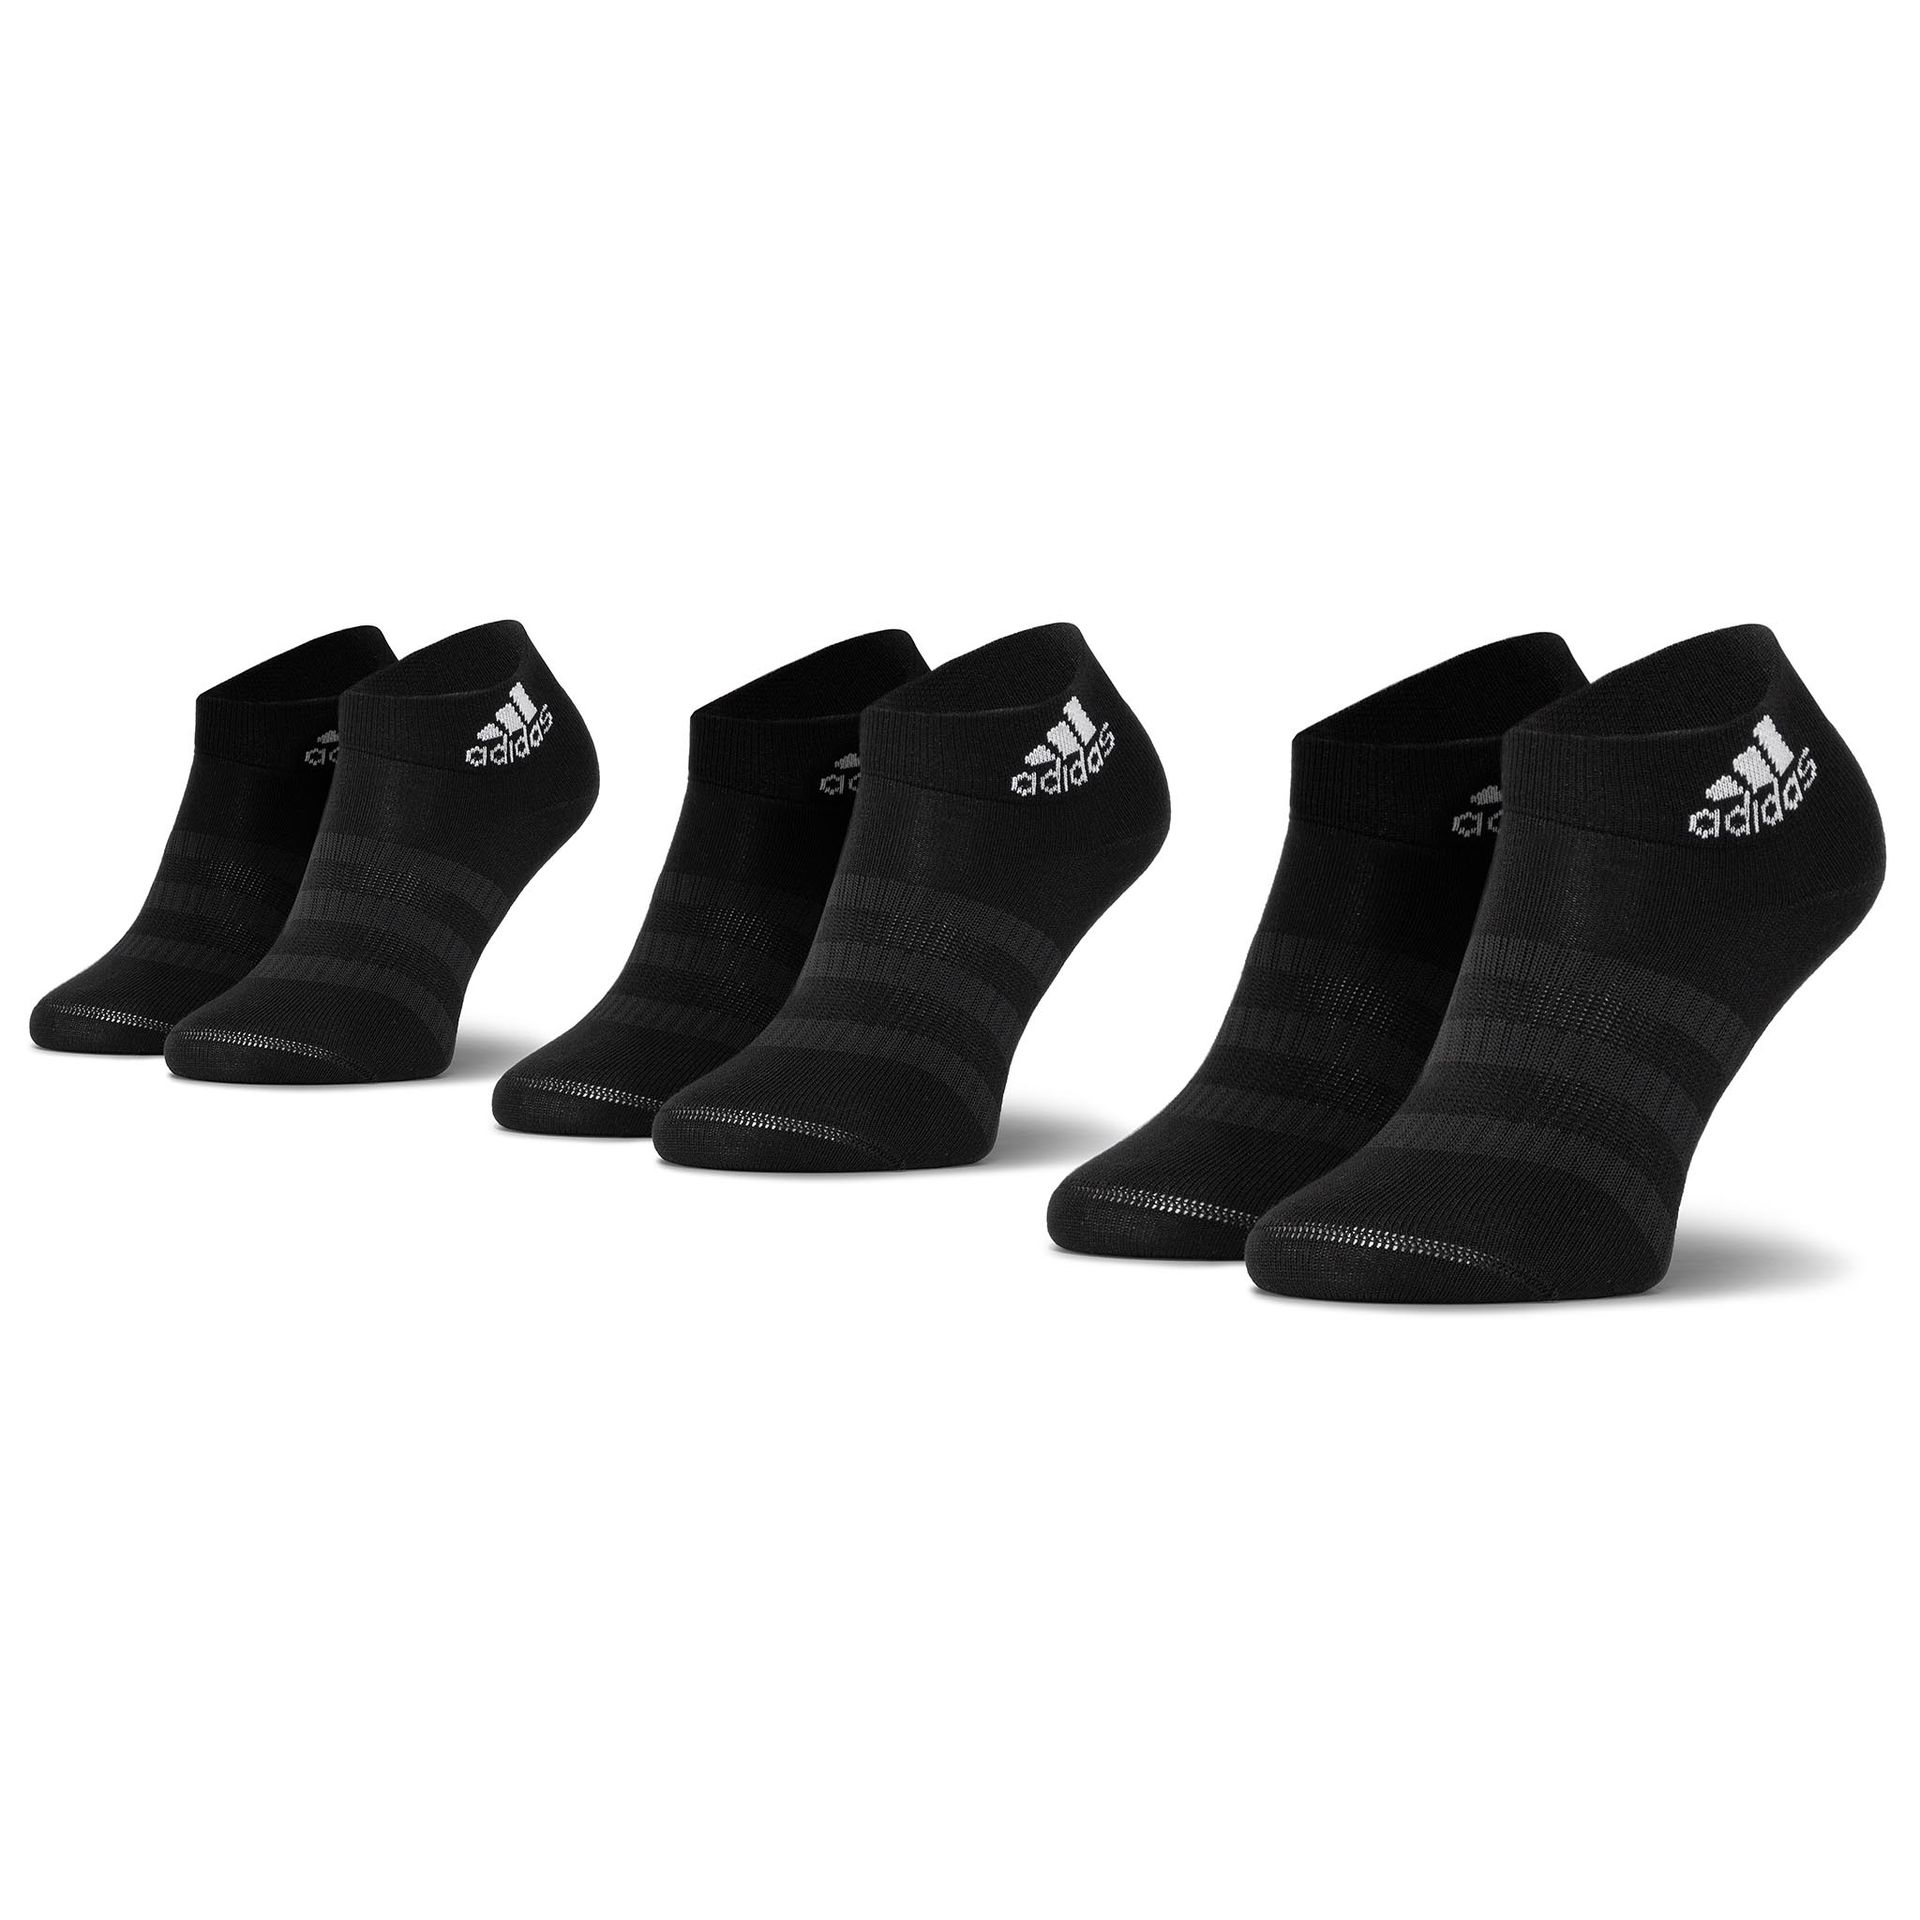 Adidas Zestaw 3 par niskich skarpet unisex Light Ank 3Pp DZ9436 Black/Black/Black